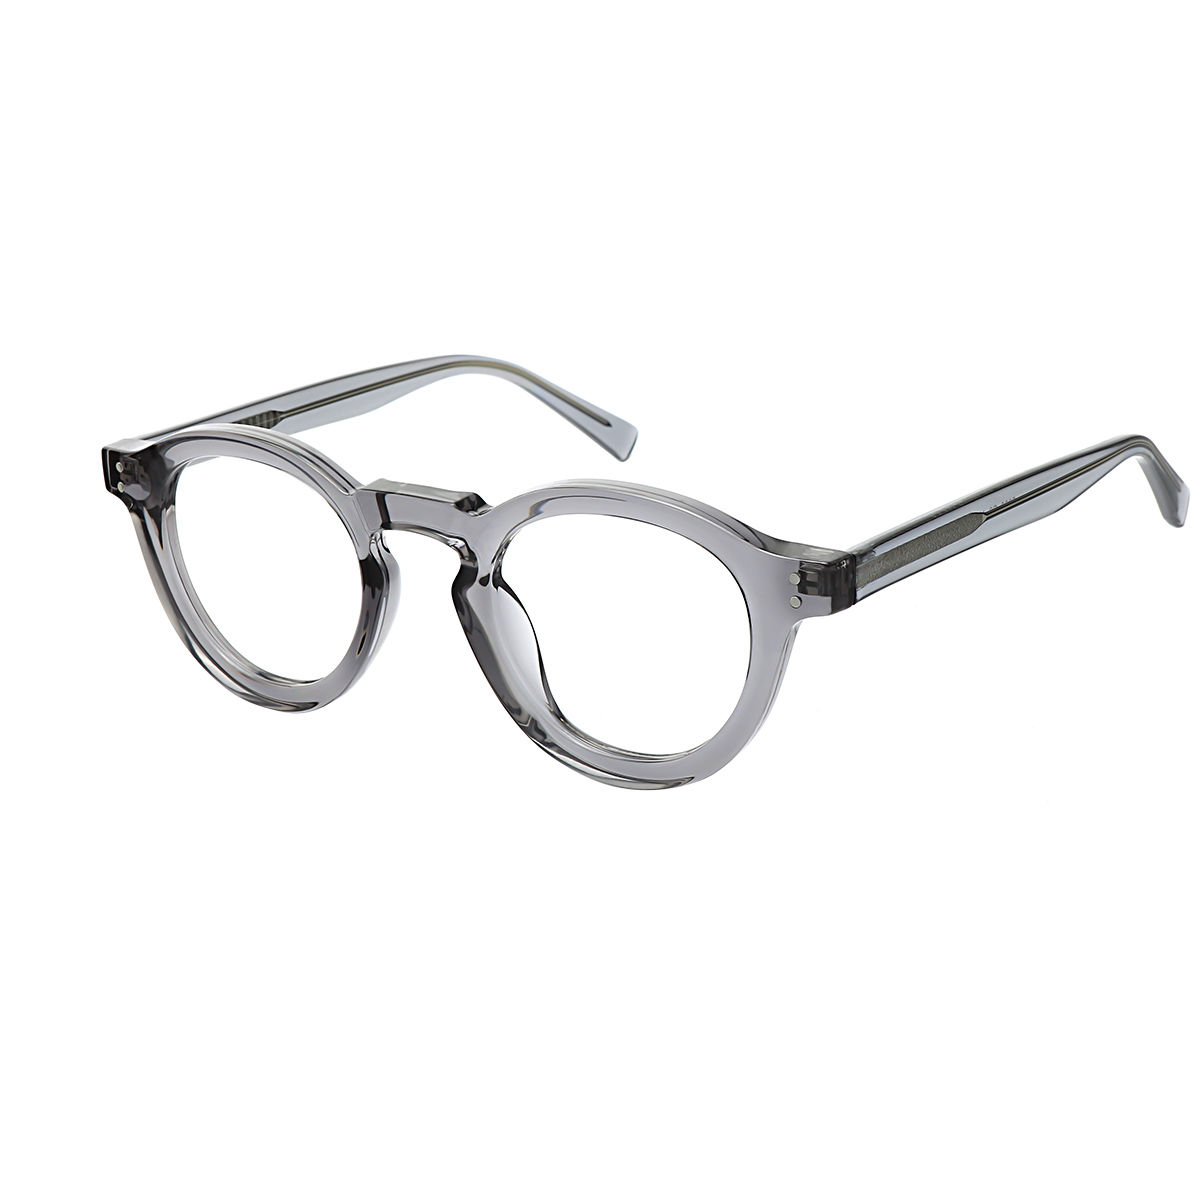 Mabel - Round Grey/Transparent Reading Glasses for Men & Women